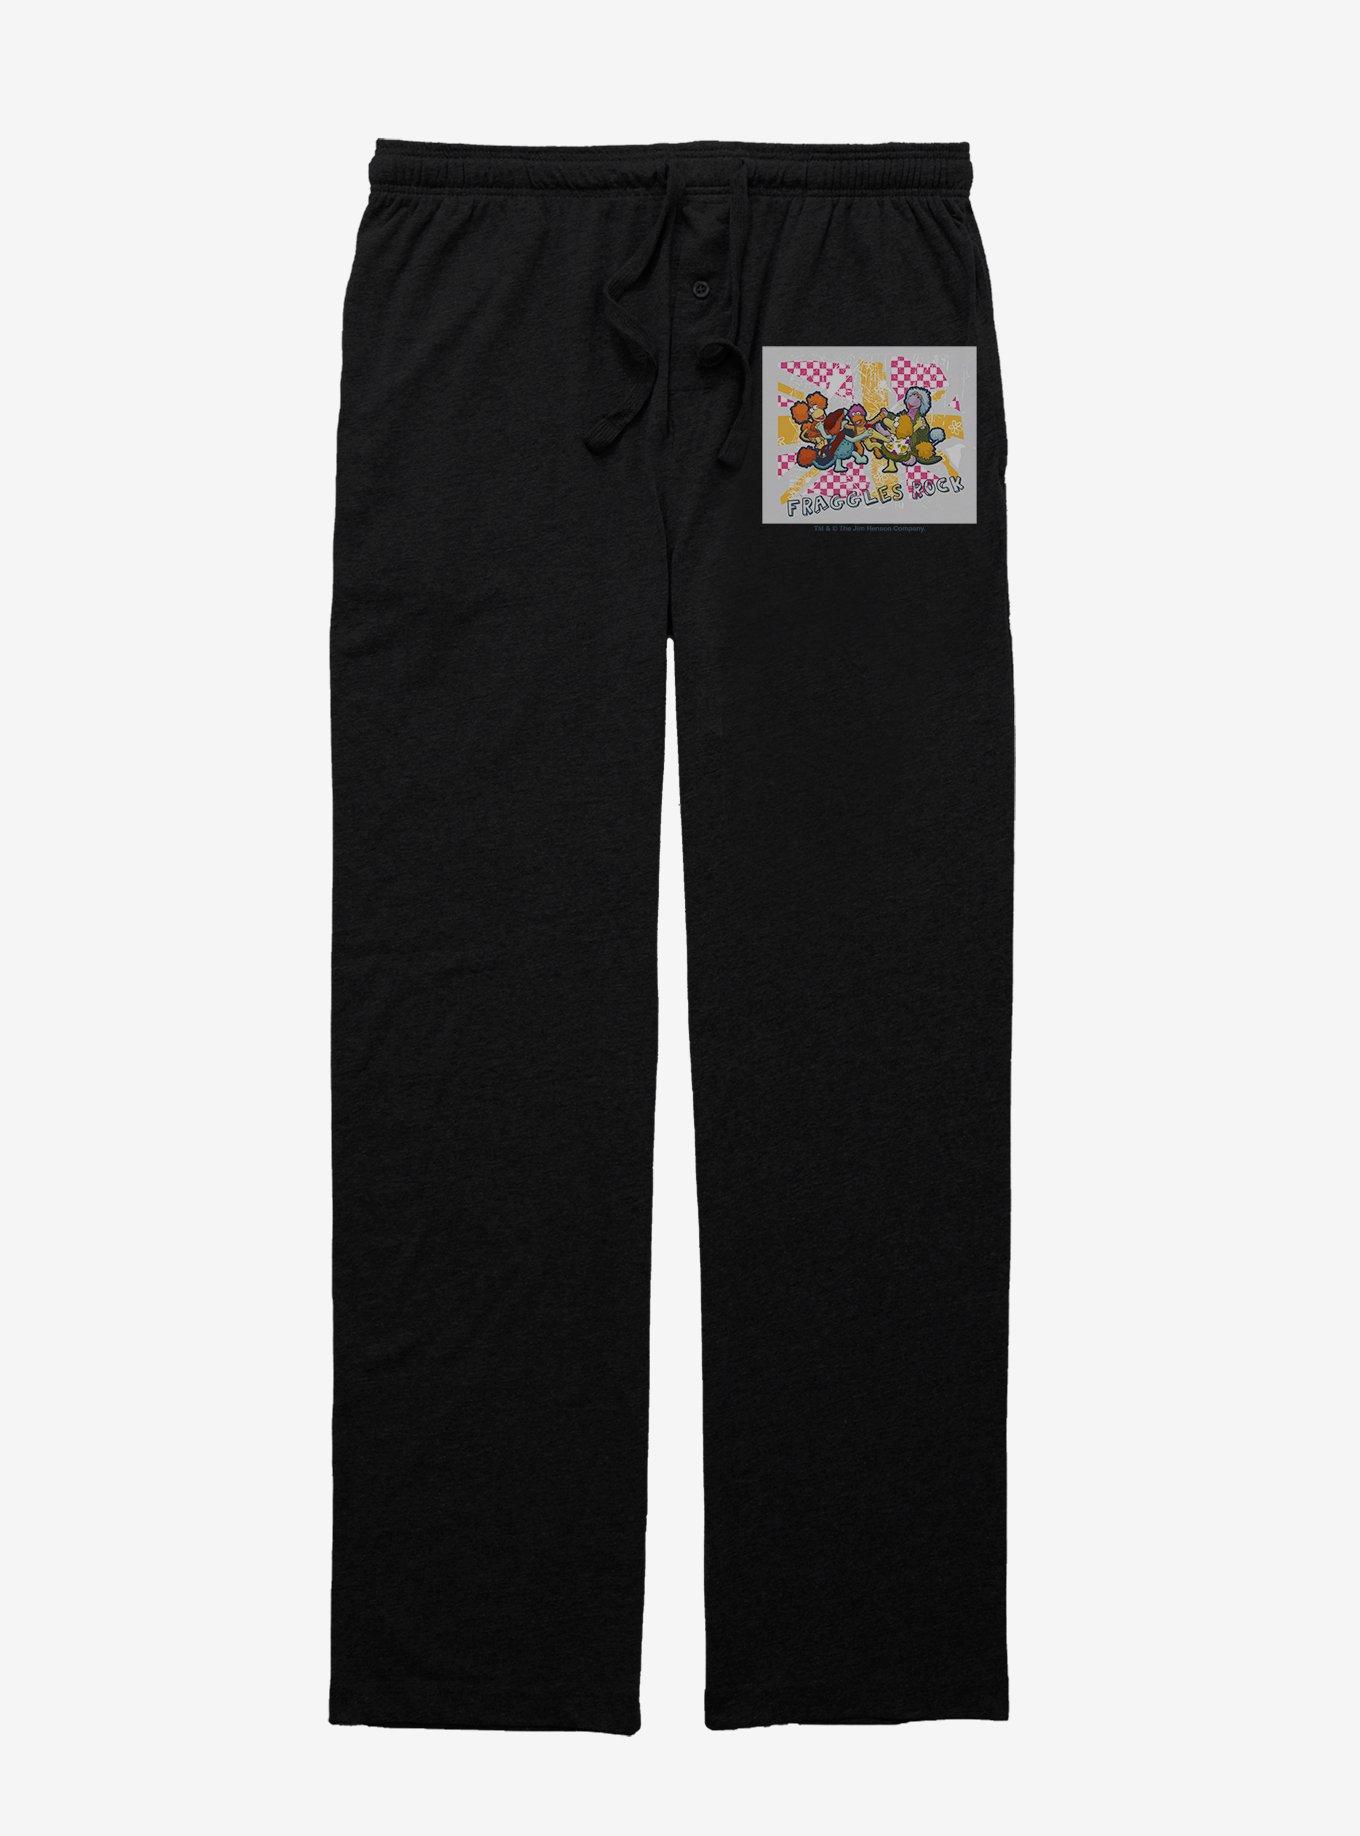 Jim Henson's Fraggle Rock Dancing Fraggles Pajama Pants, BLACK, hi-res